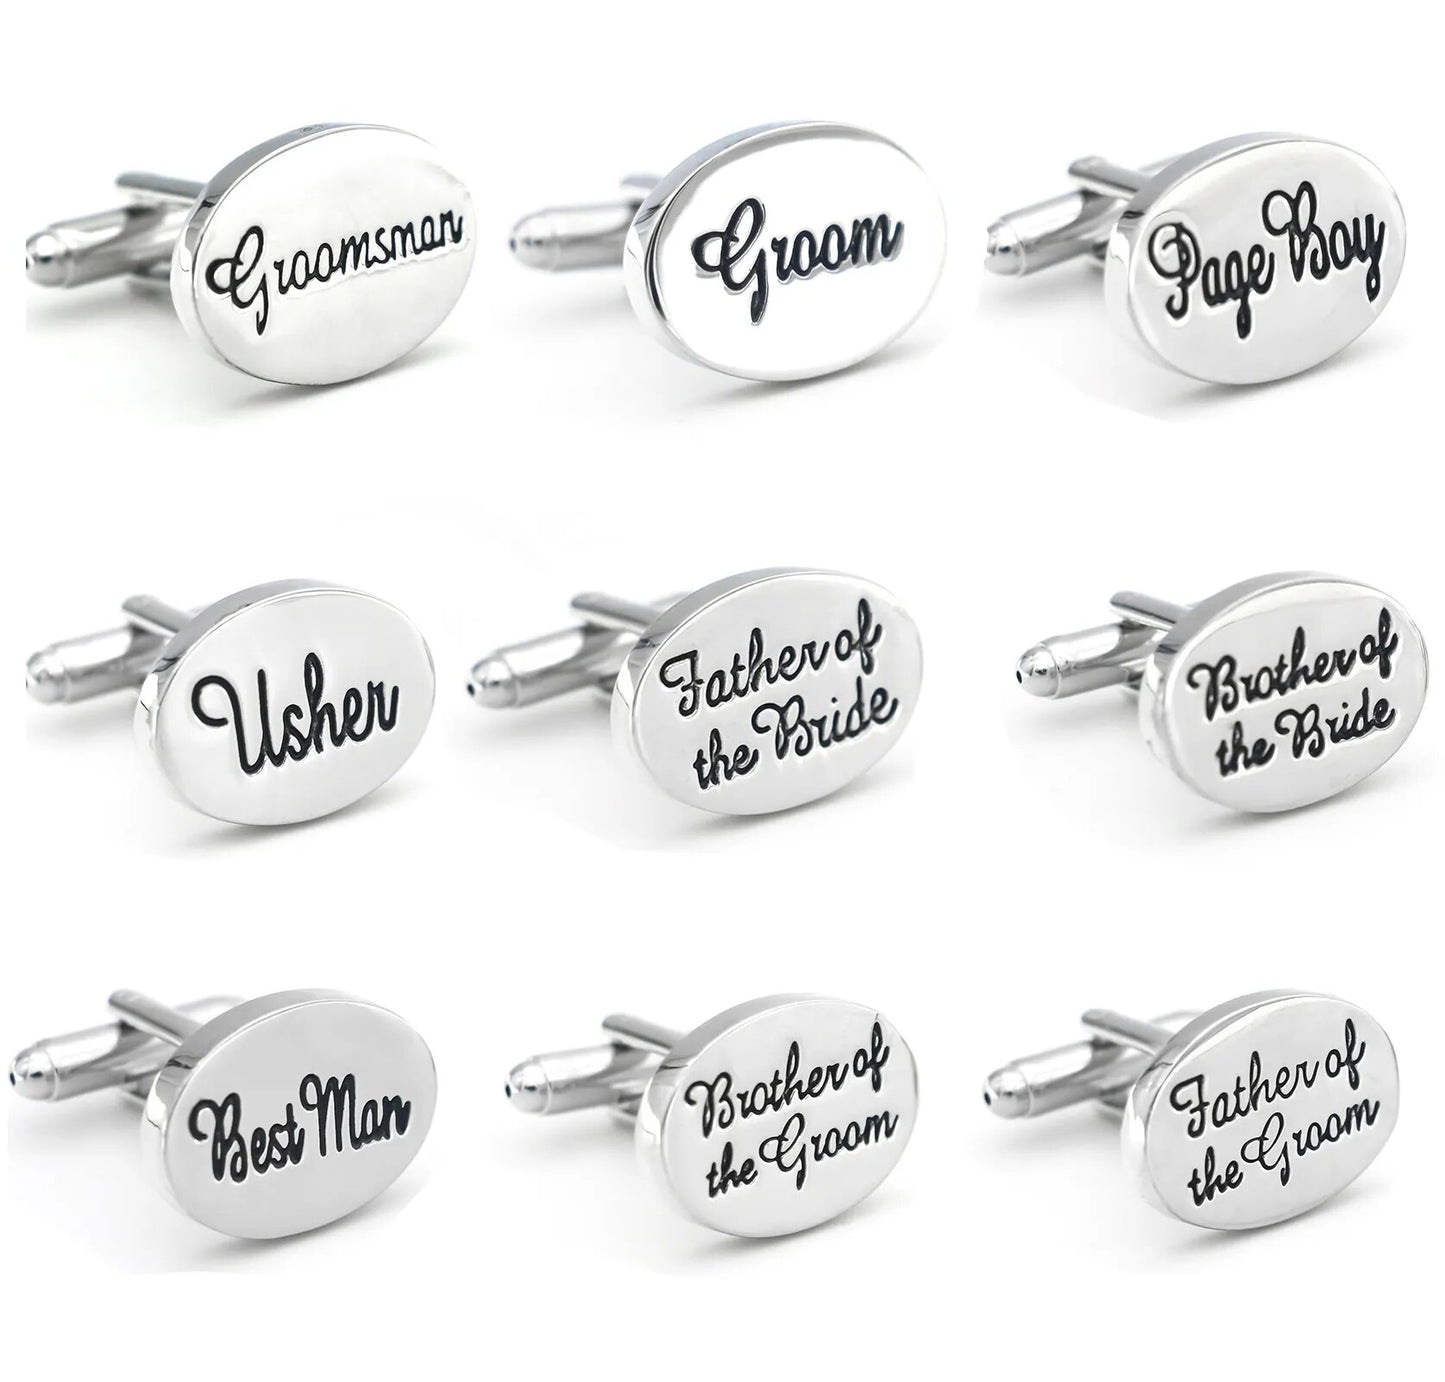 Silver Men's Wedding Cufflinks: Groomsman, Best Man & Usher Design